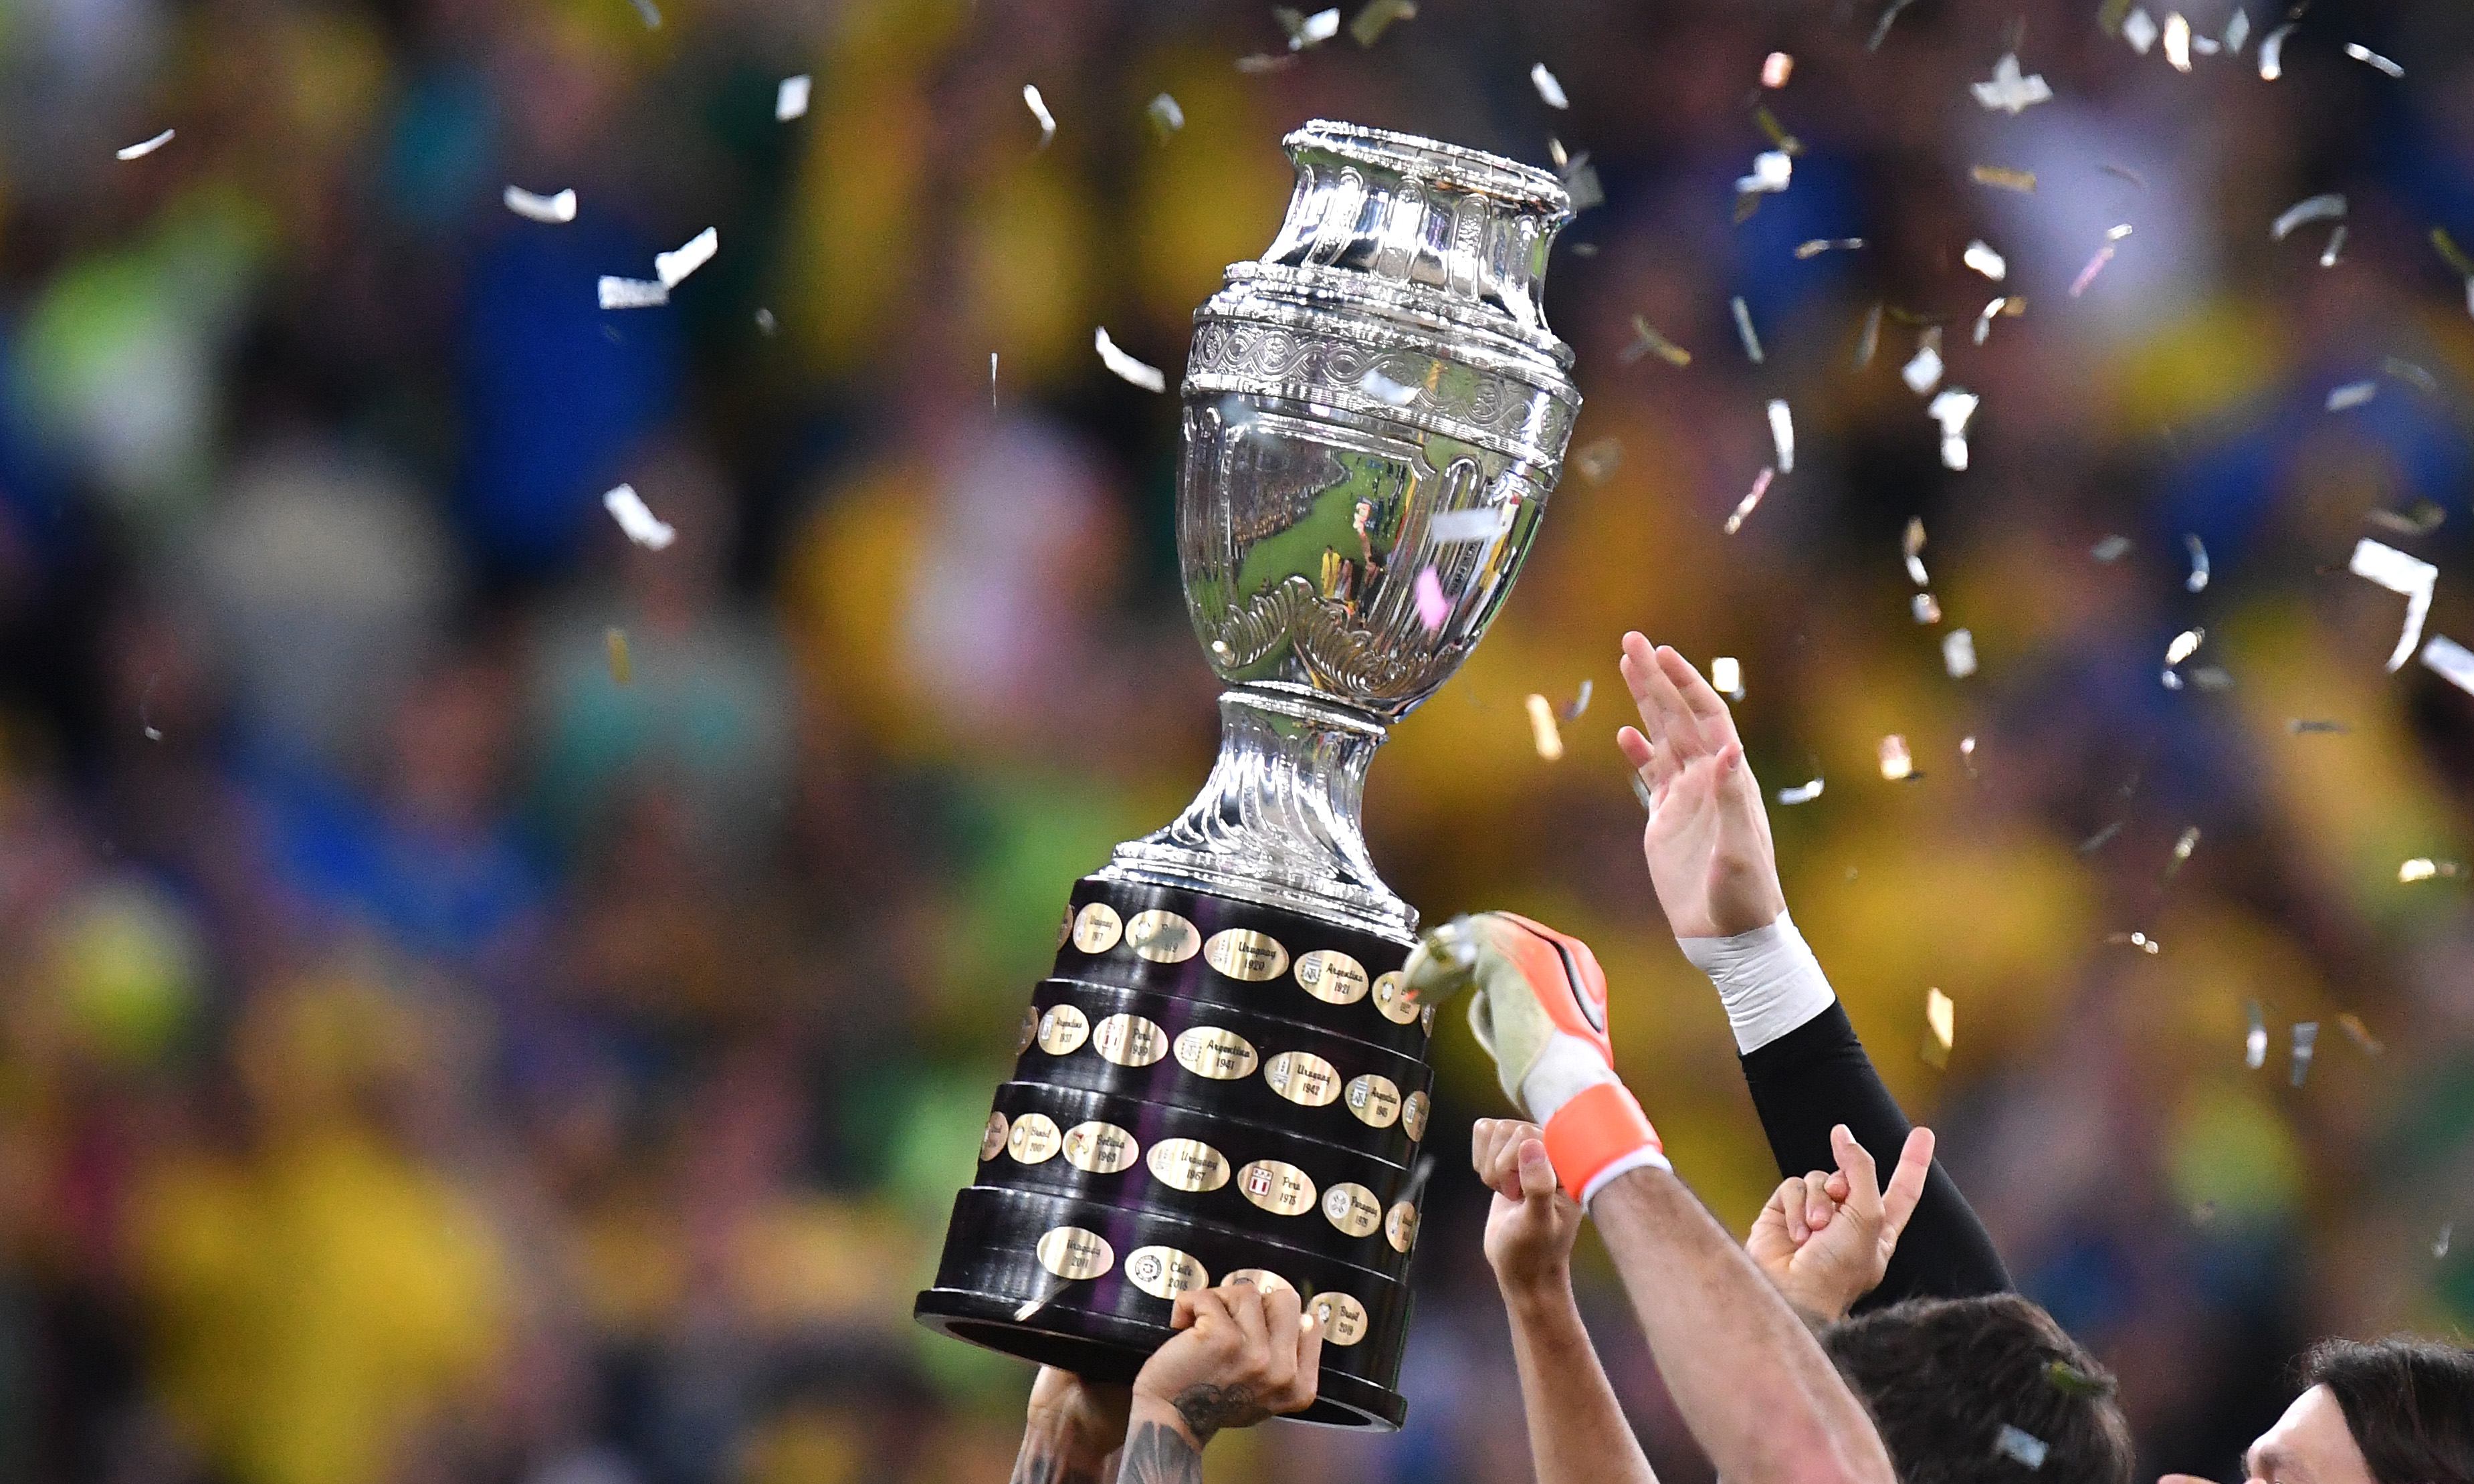 Copa America 